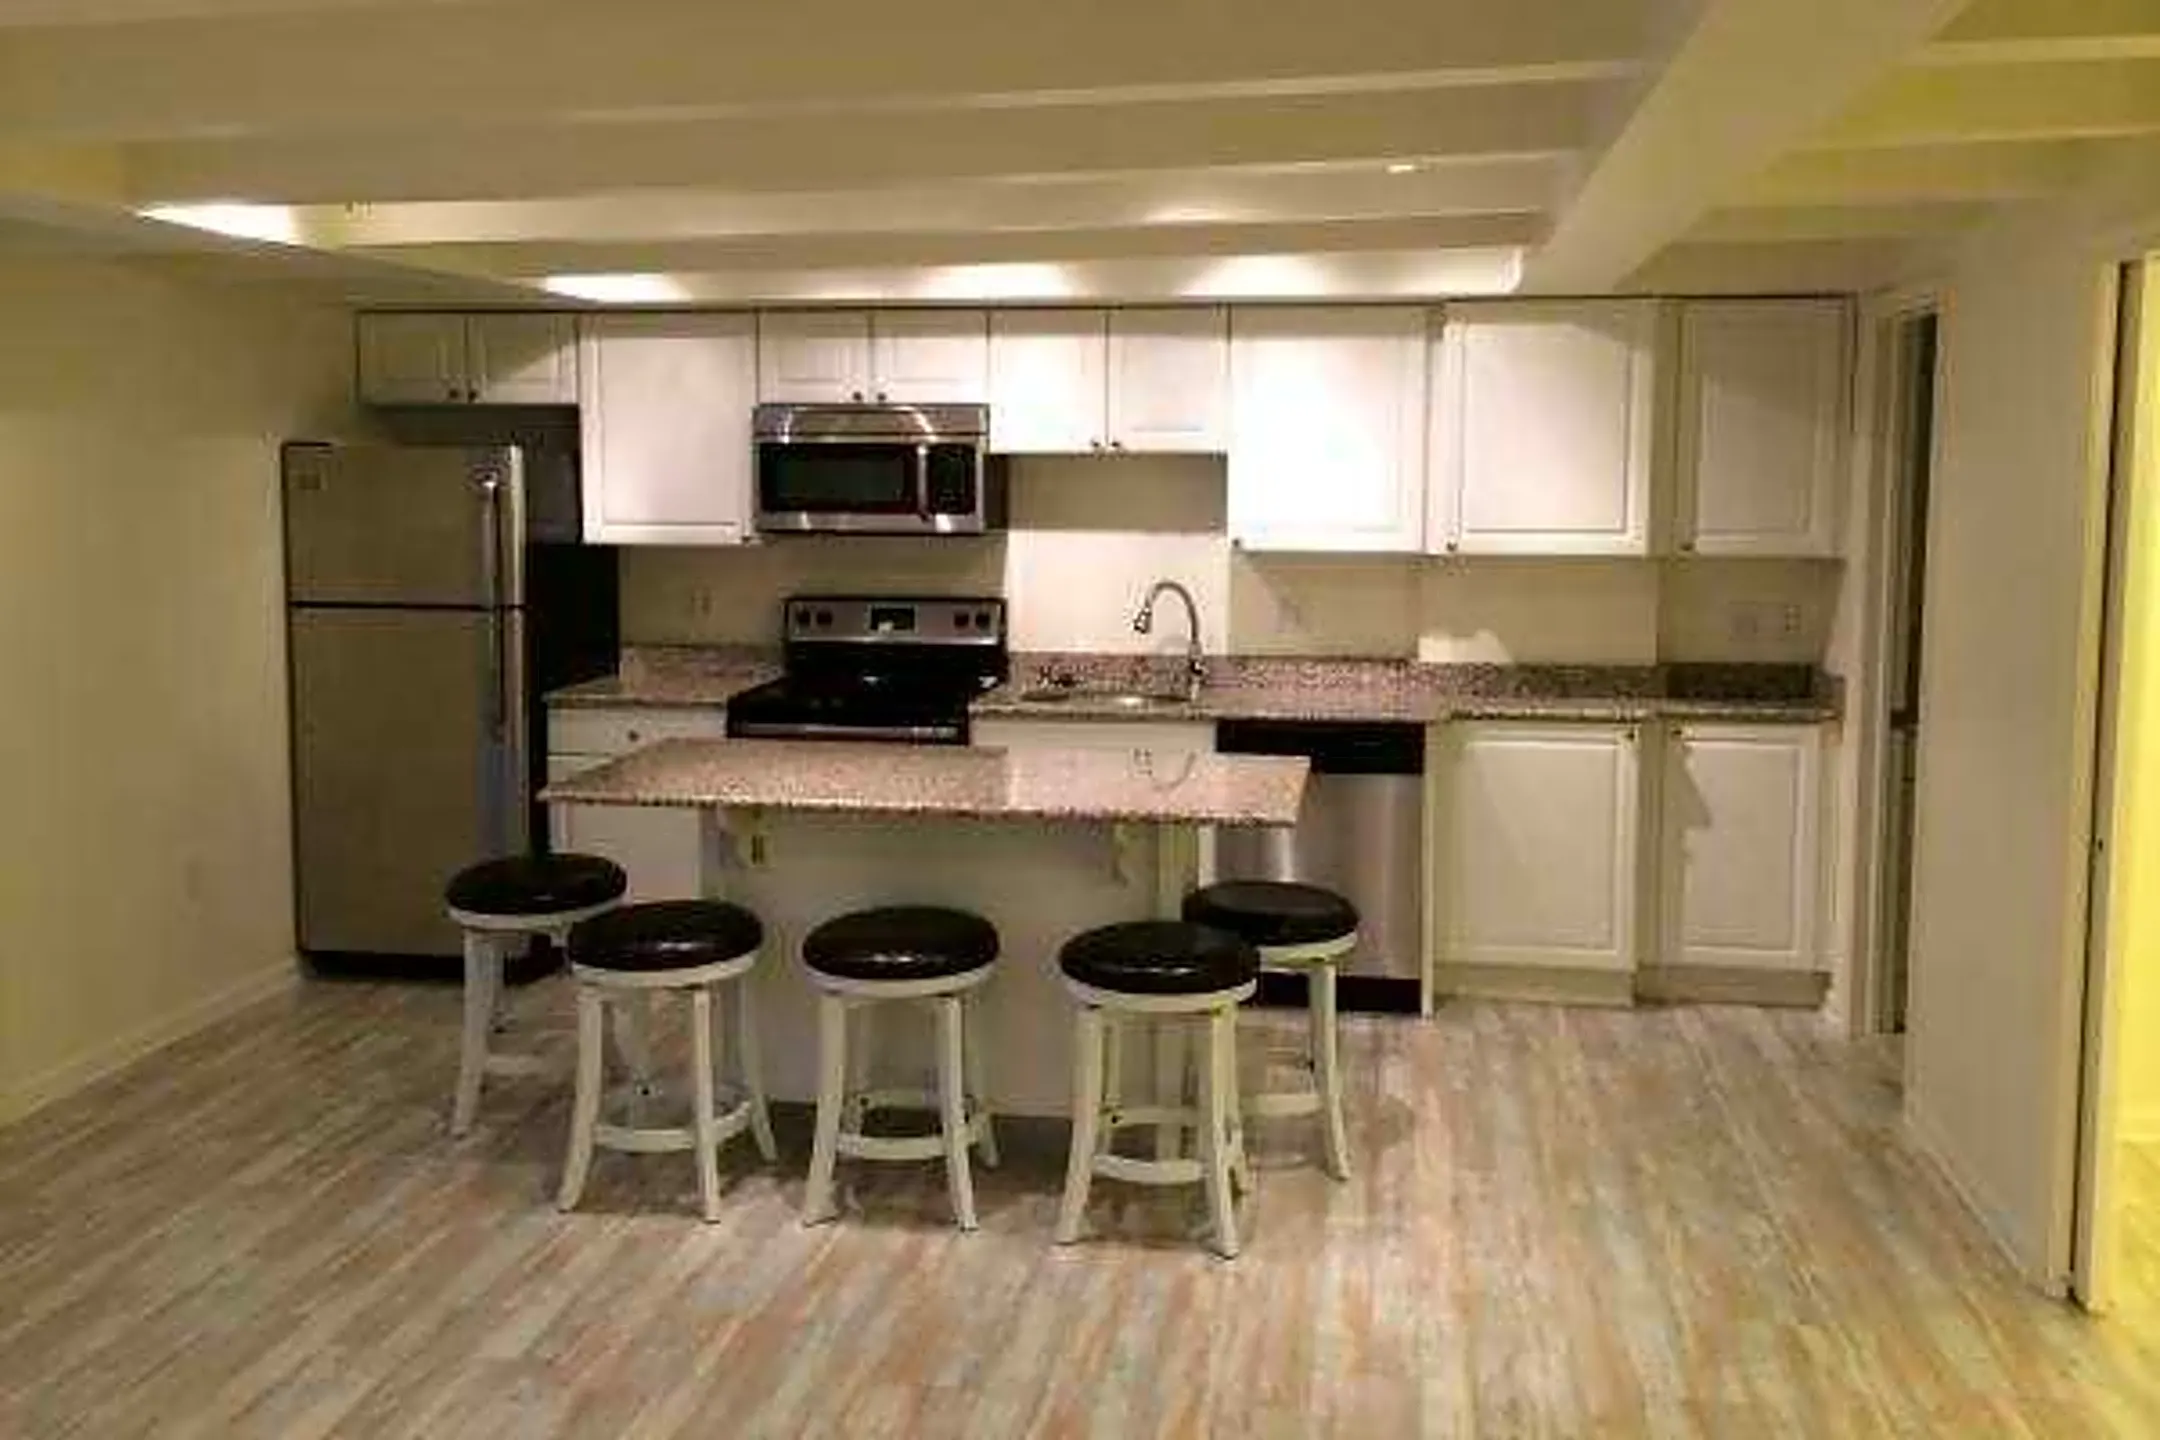 Kitchen - Rotegliano Apartments - Harrisburg, PA